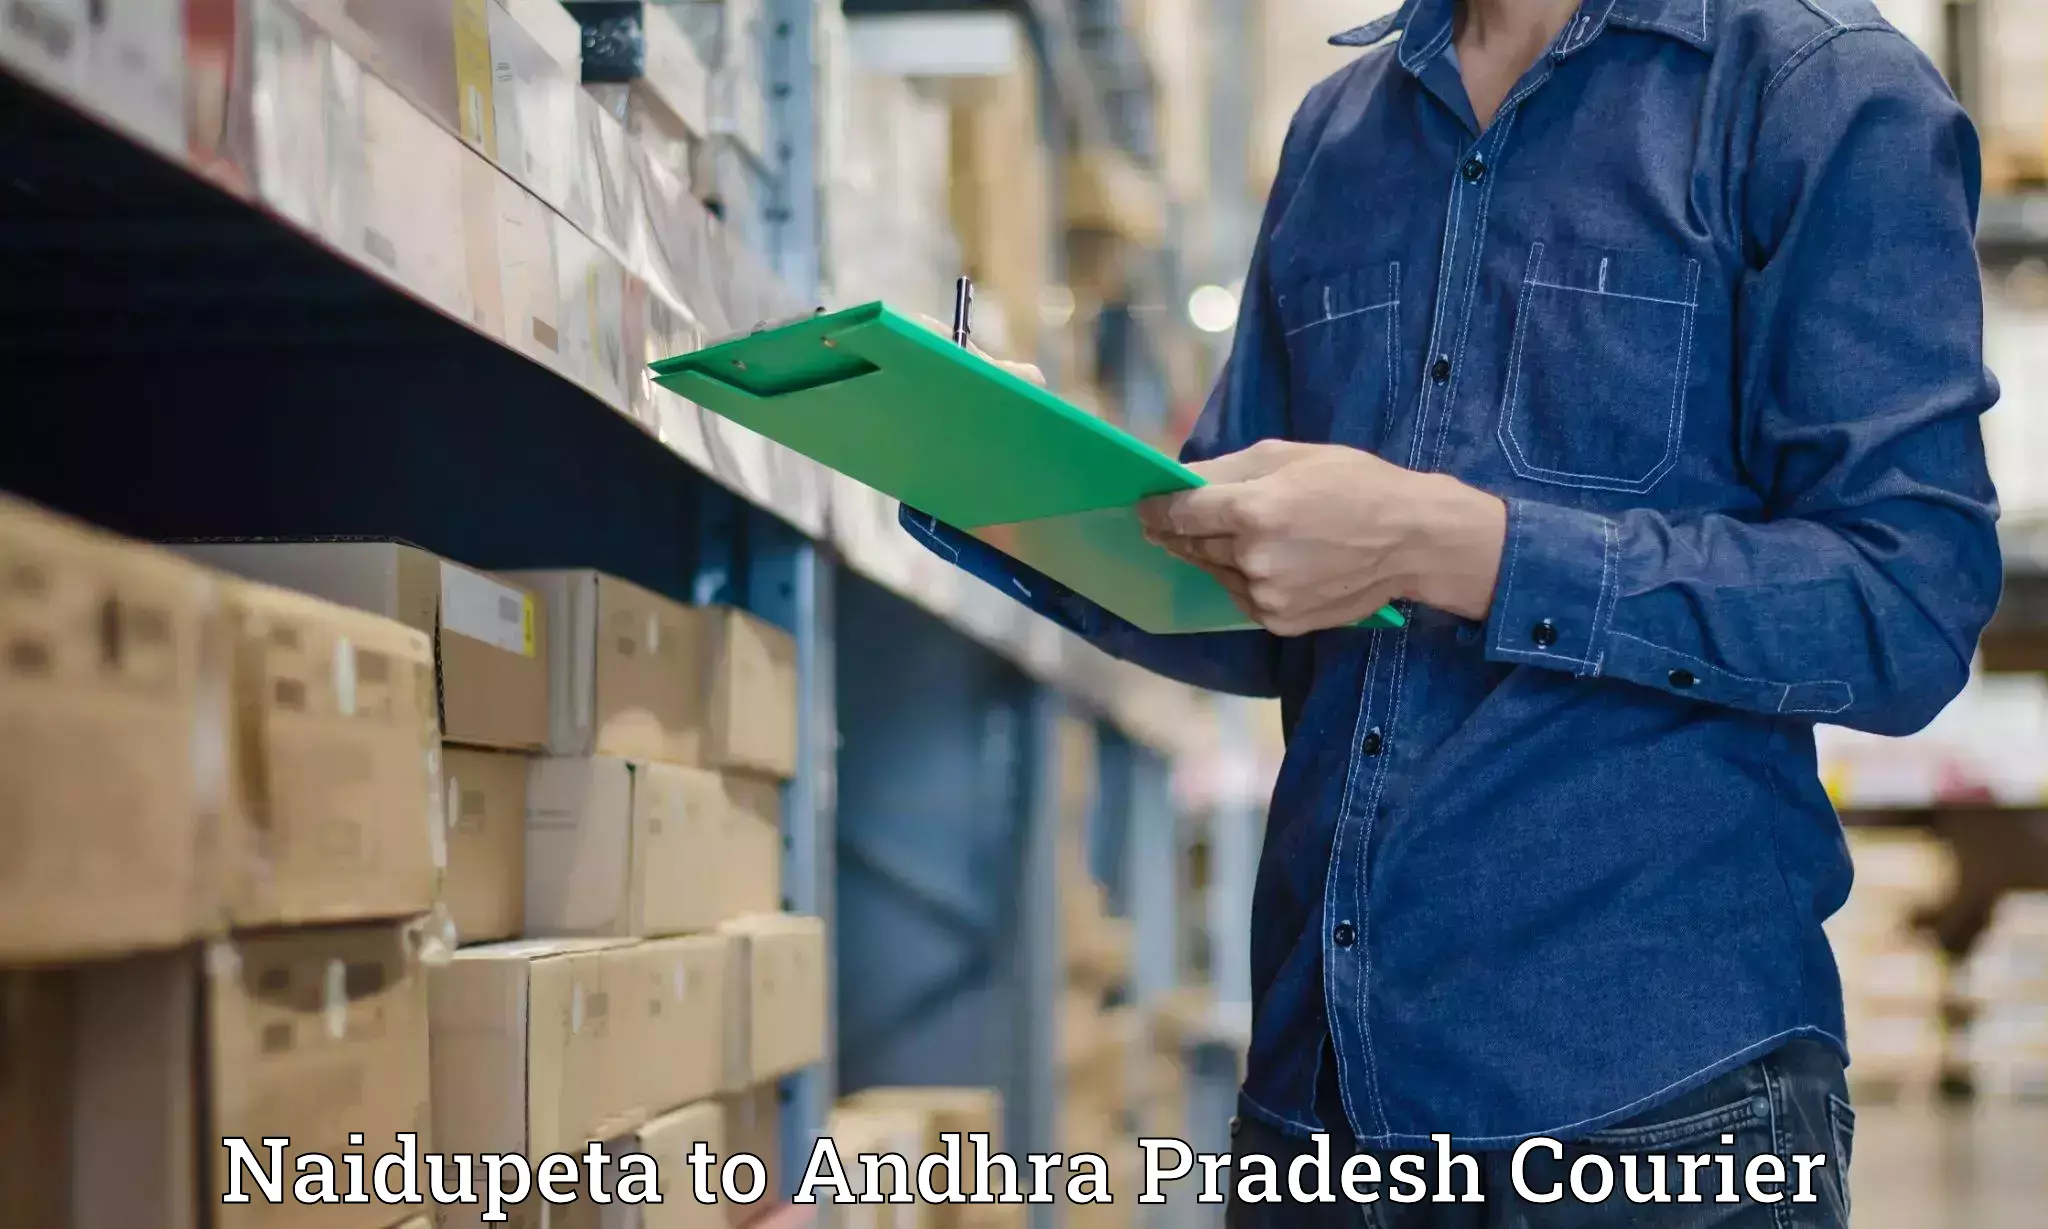 Advanced shipping network Naidupeta to Tirupati